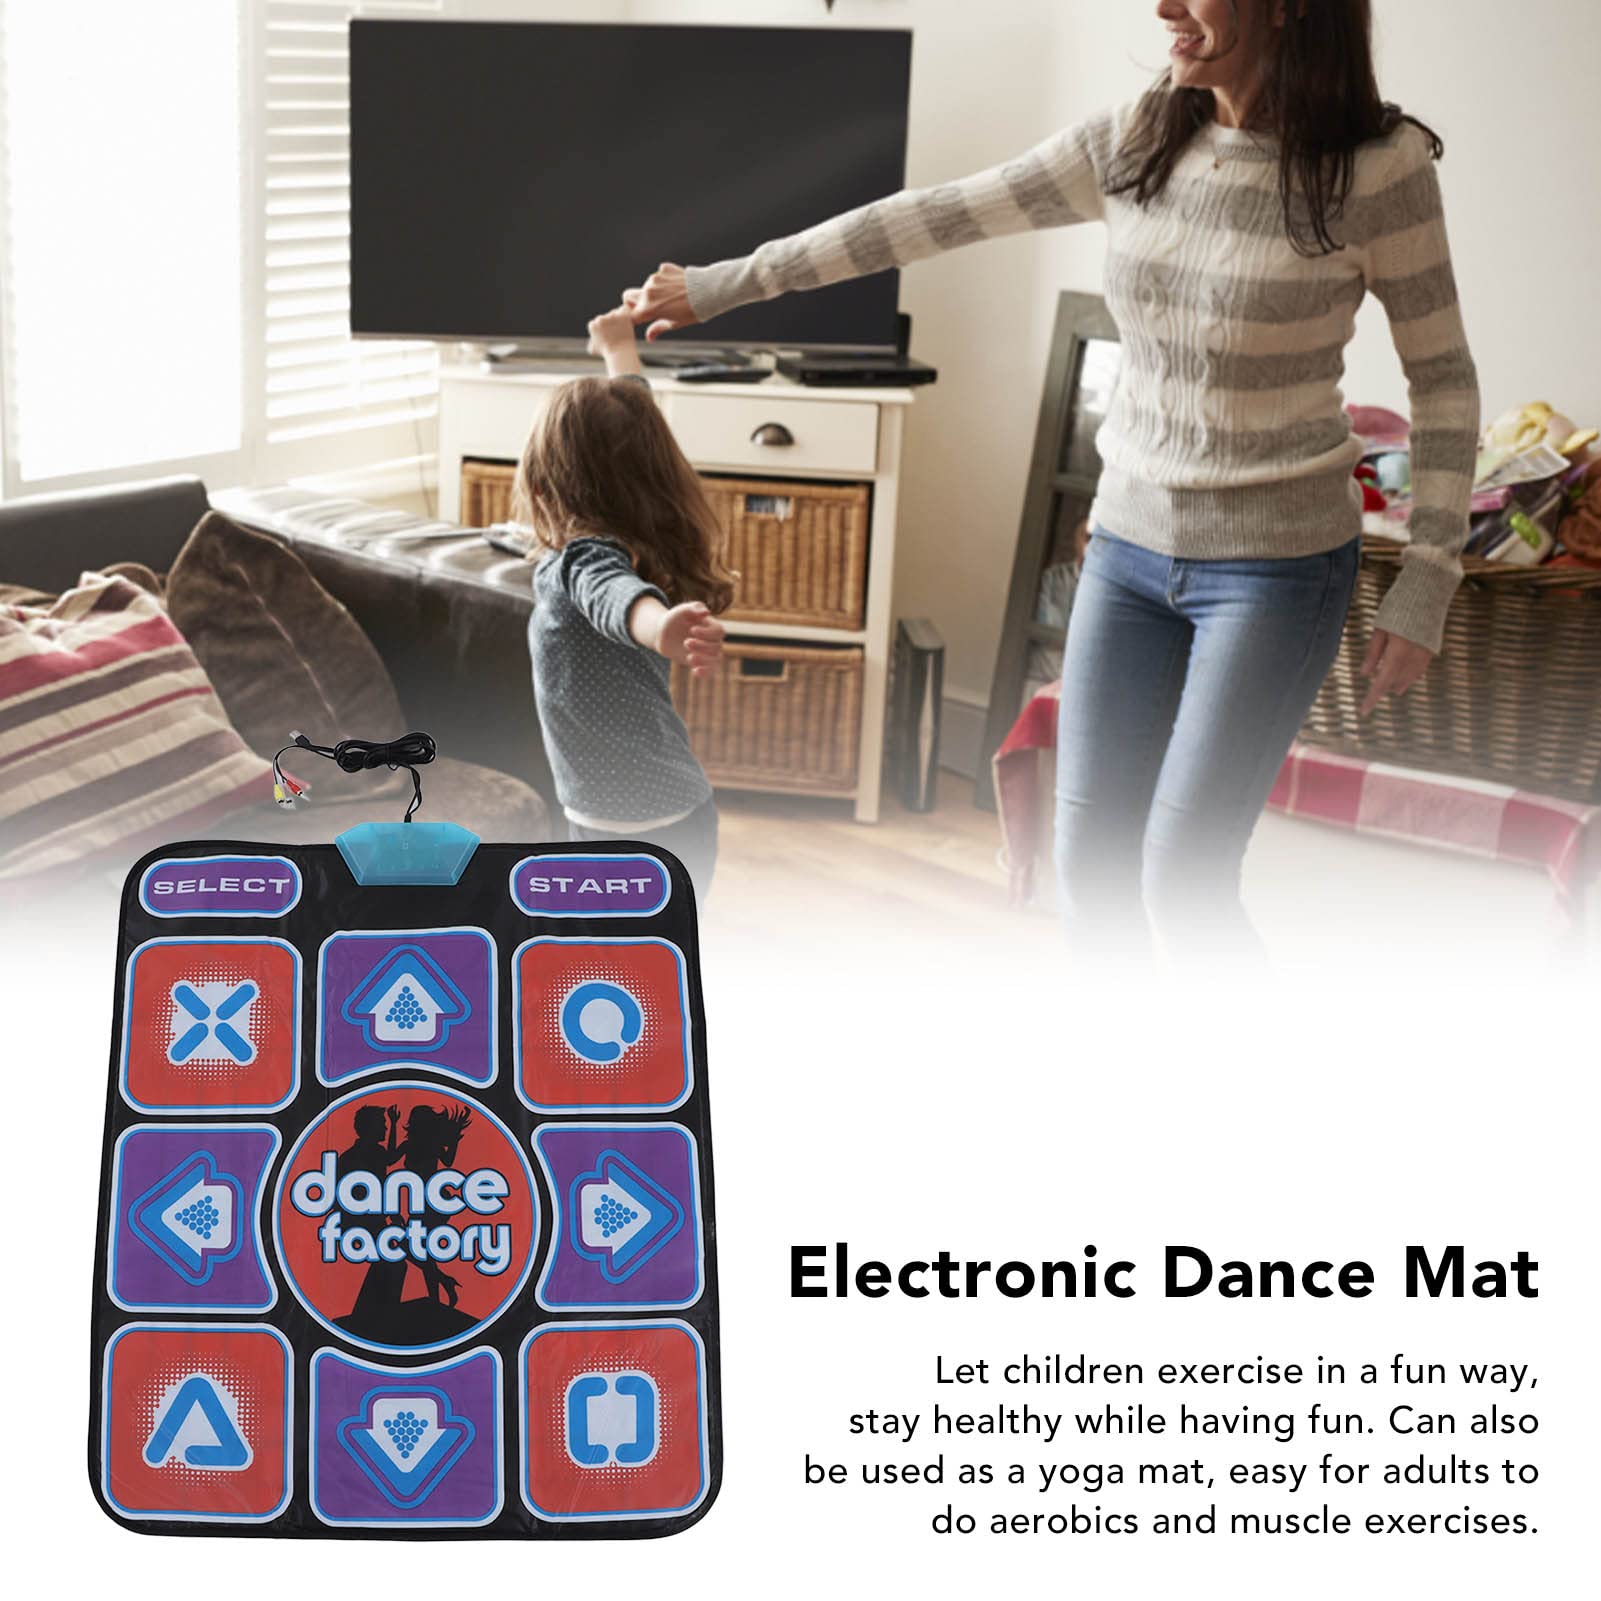 Pilipane Dance Mat,Musical Electronic Dance Mat Gift for 3 to 12 Year Old Girls Boys,Built in Music,Soft Prevent Slip Musical Dance Mat,Christmas Birthday Gifts for Boys Girls,for TV